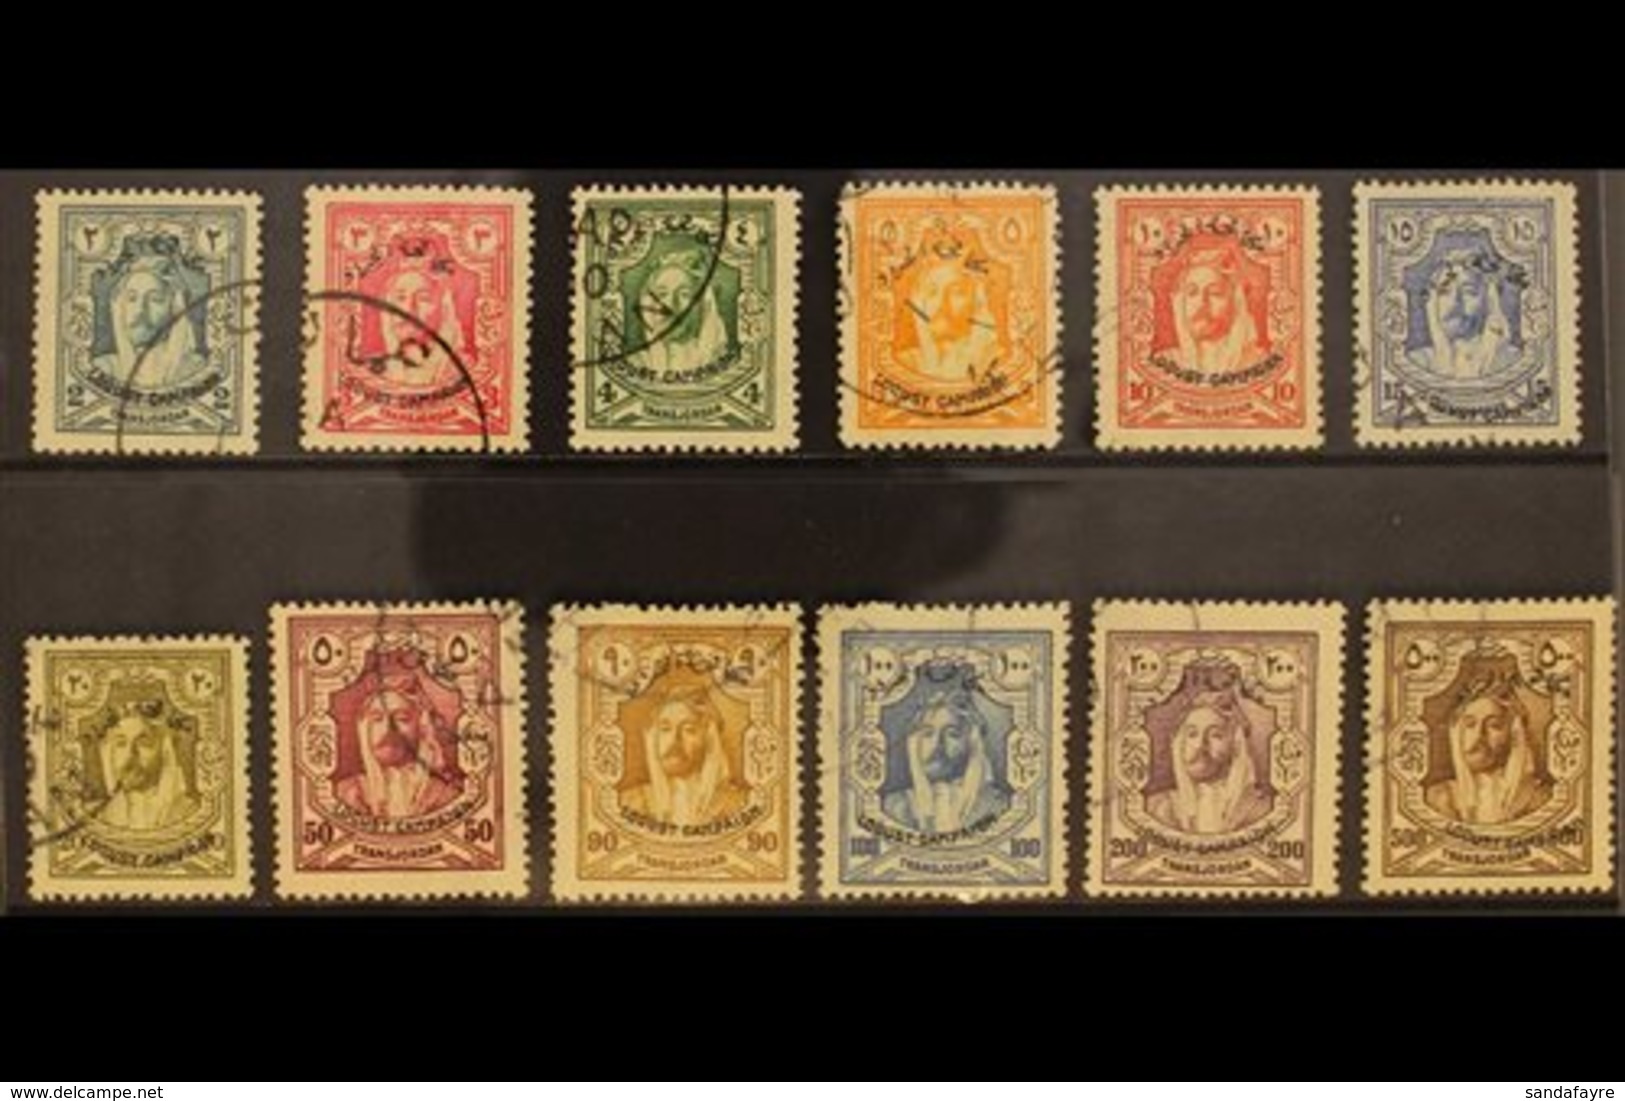 1930 LOCUST CAMPAIGN Emir "Locust Campaign" Overprinted Set, SG 183/94, Fine Used (12 Stamps) For More Images, Please Vi - Jordan